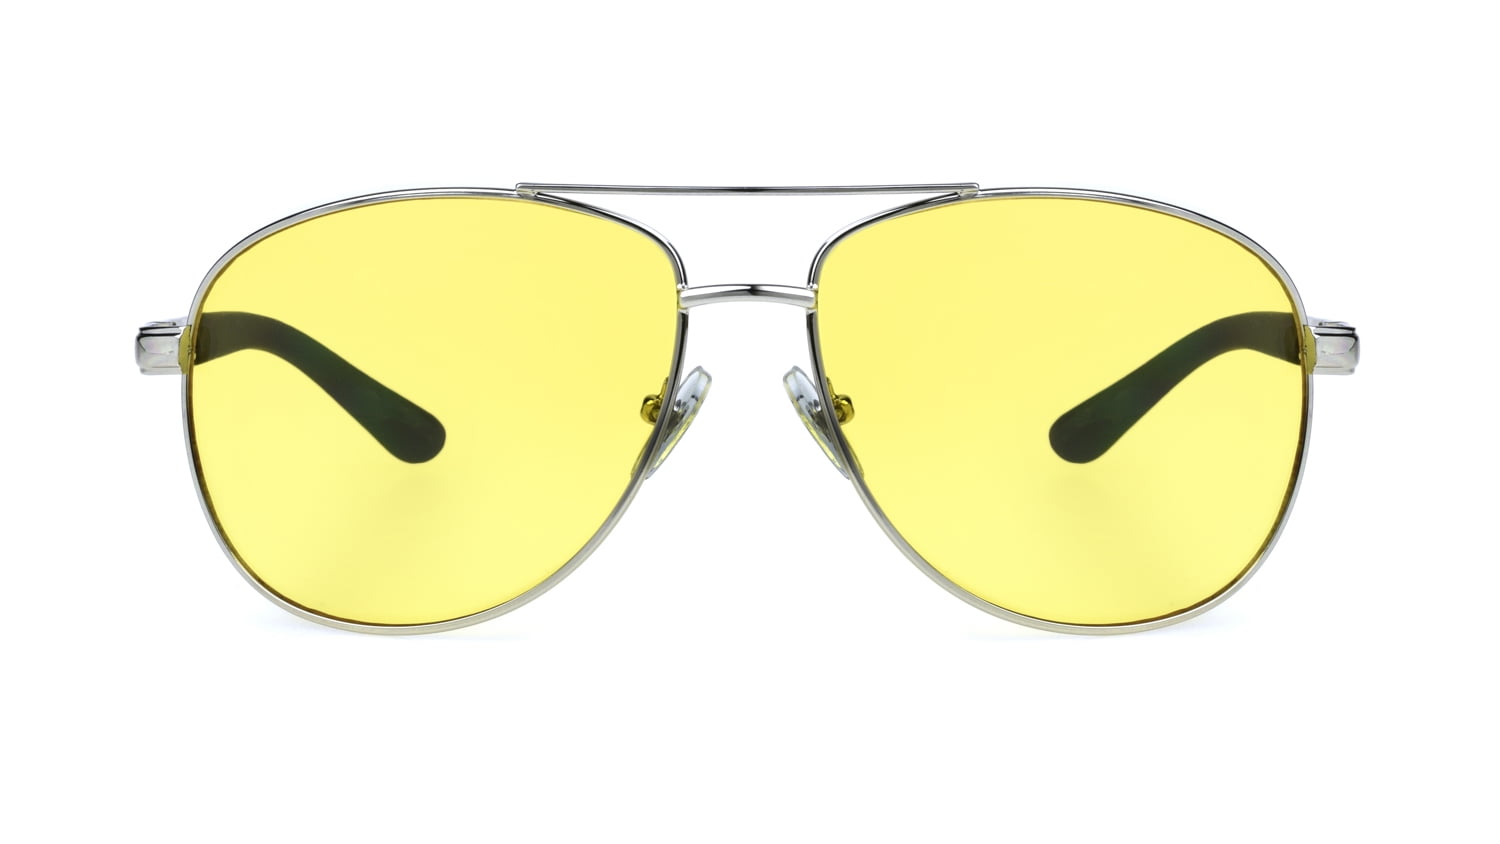 Buy Aviator Sunglasses Online at Best Price | Titan Eye+